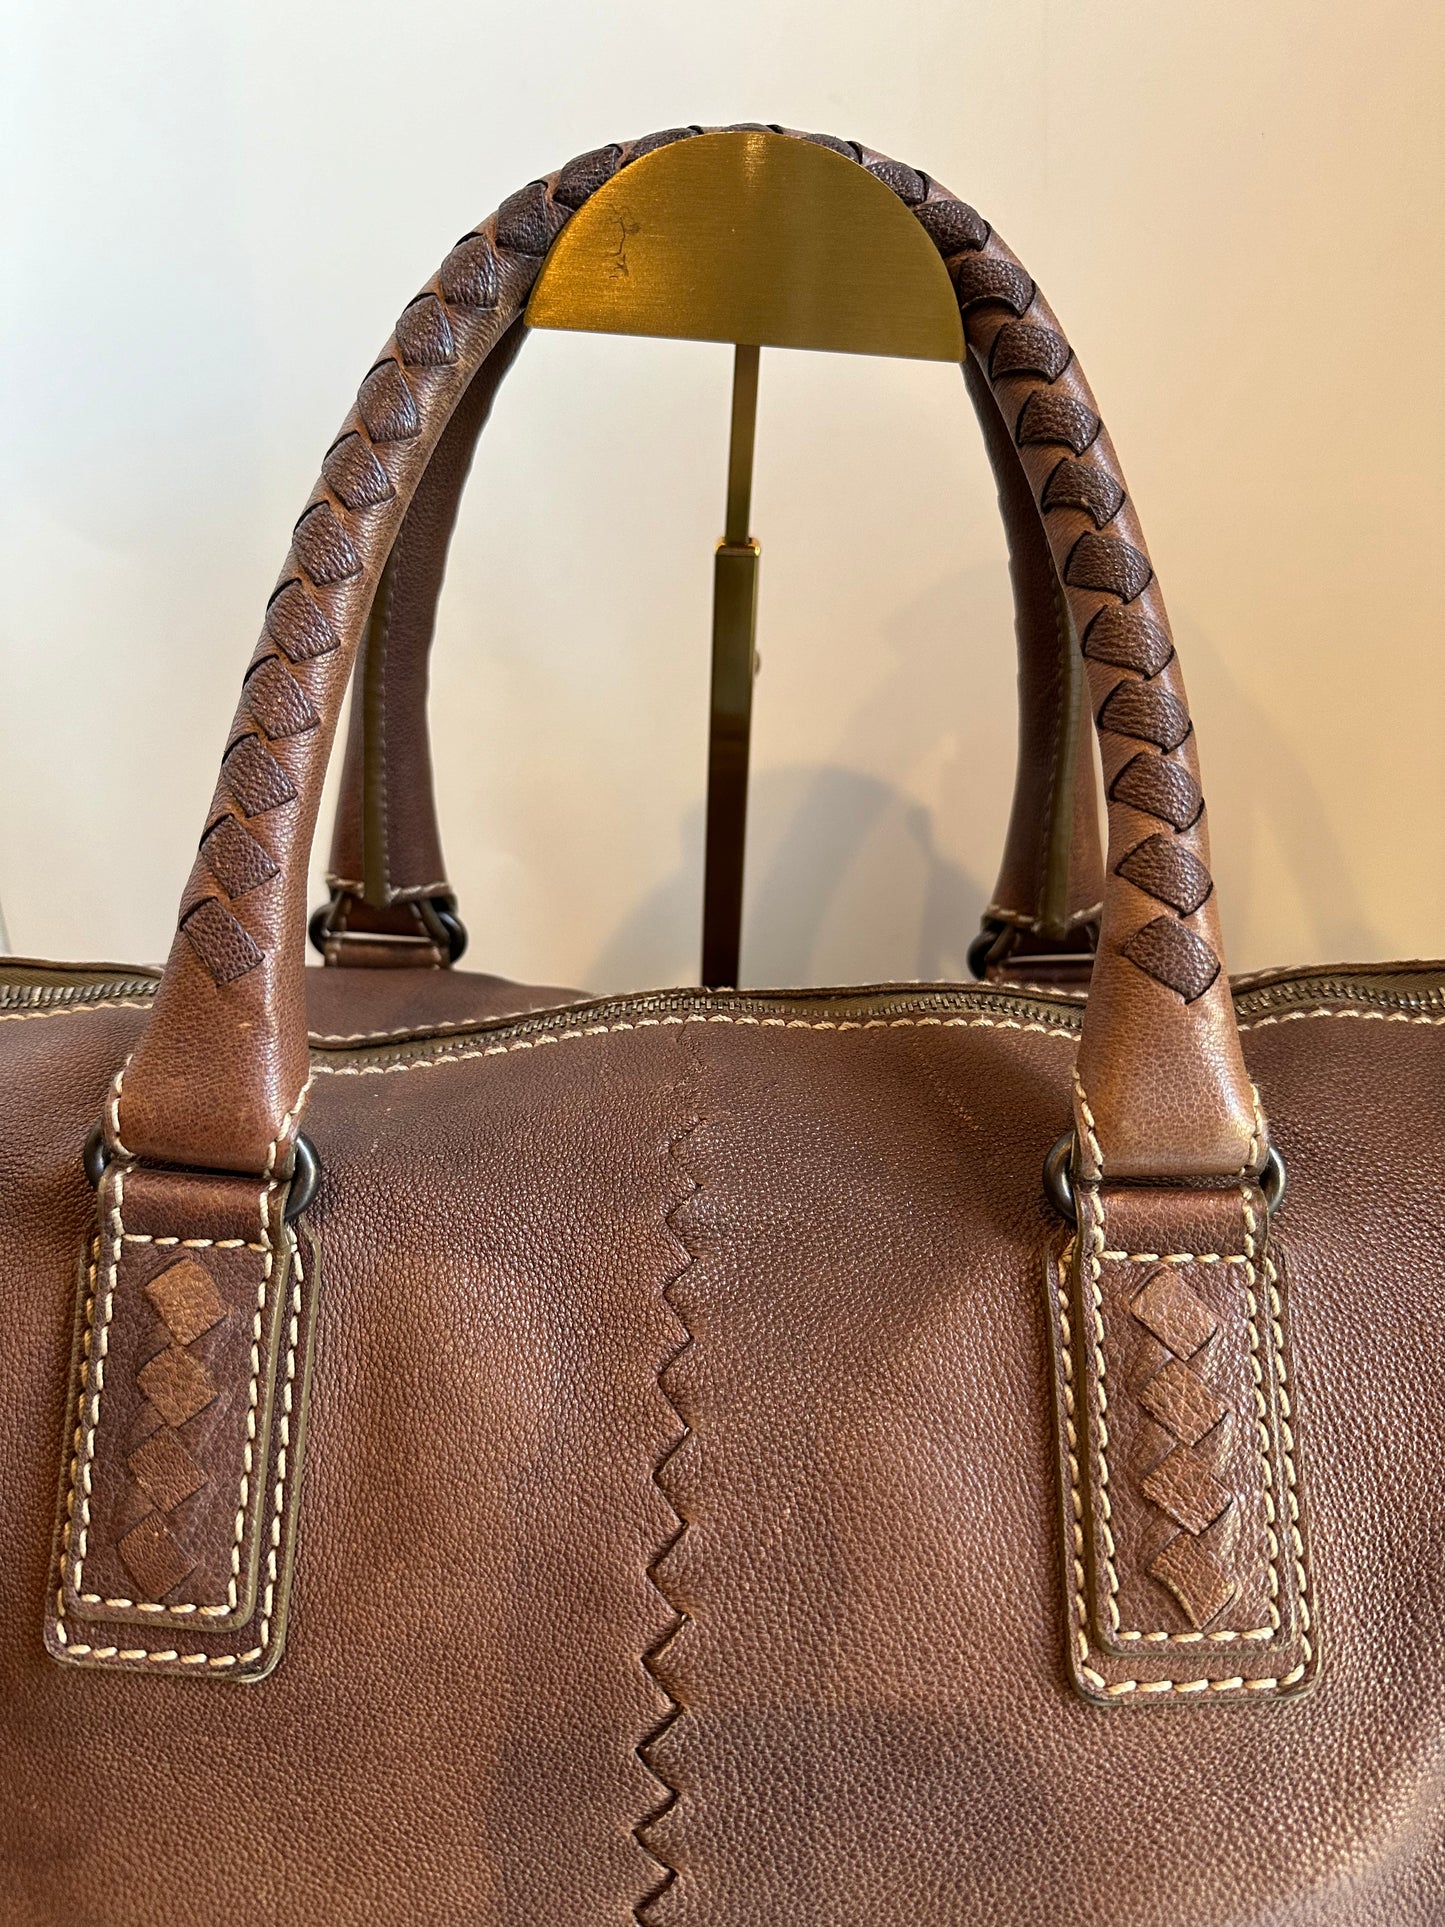 Urban - Bottega Veneta Leather Travel Bag